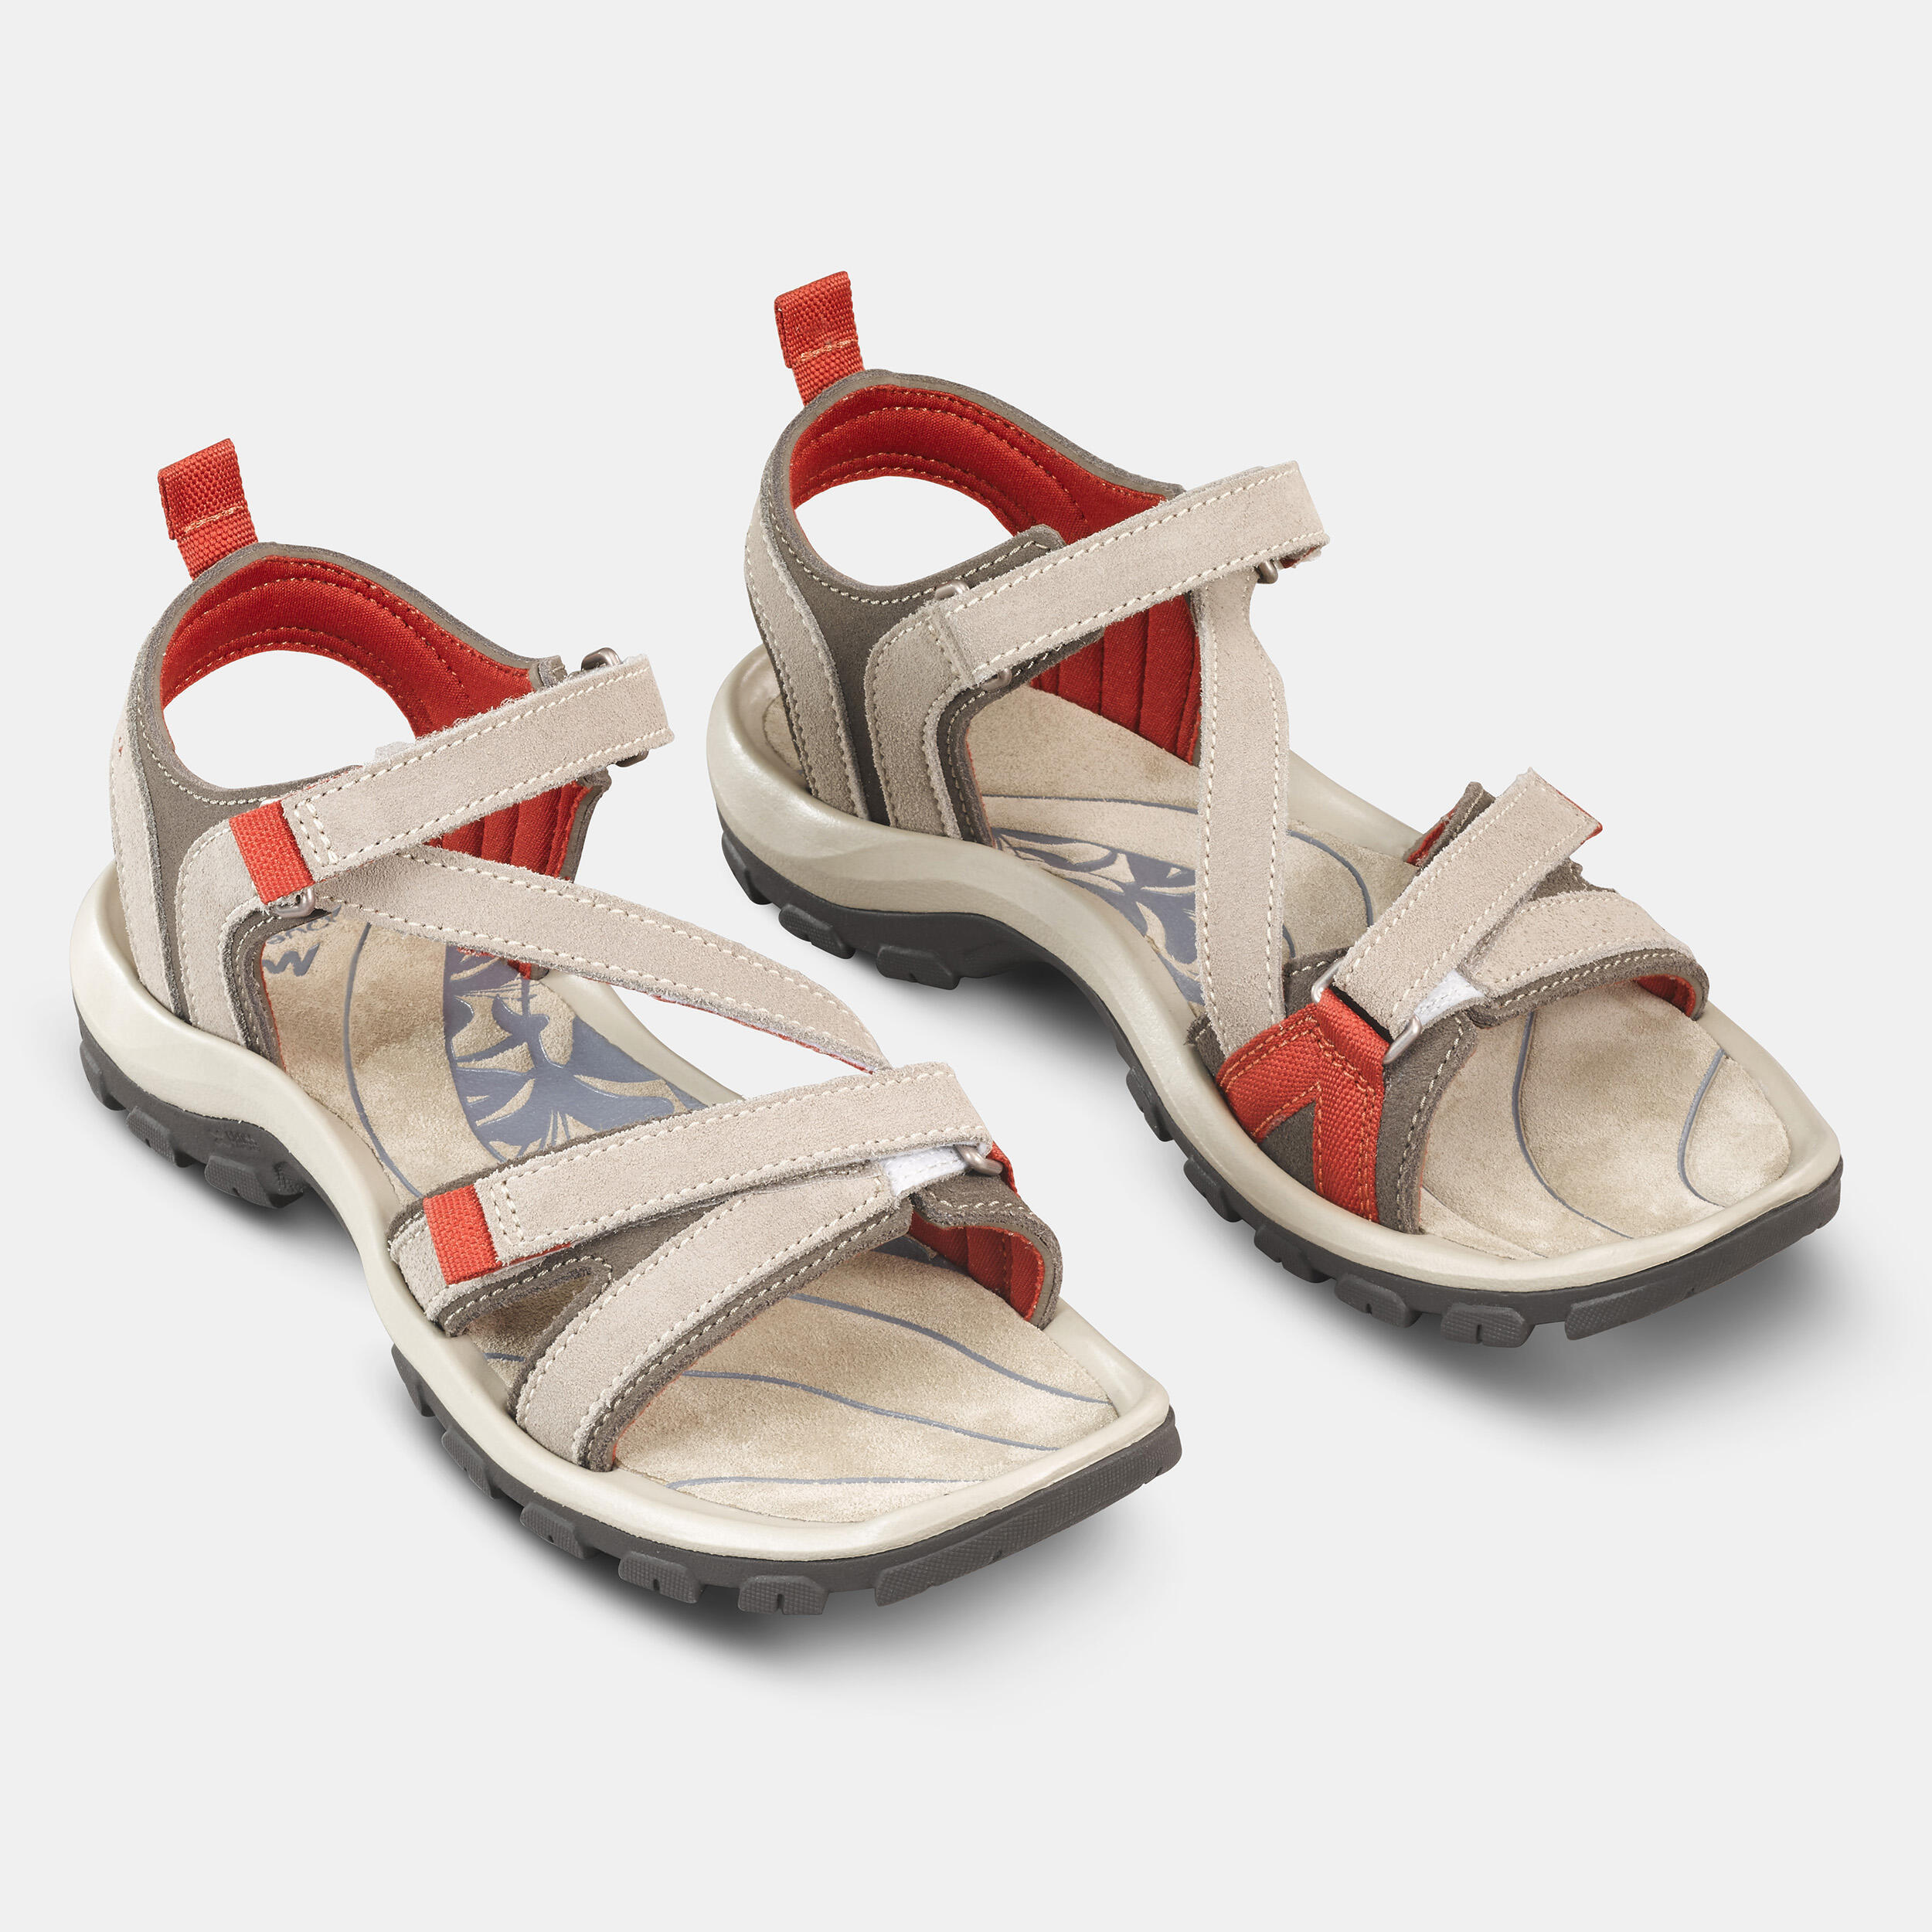 Women's walking sandals - NH120 - Brown 6/9